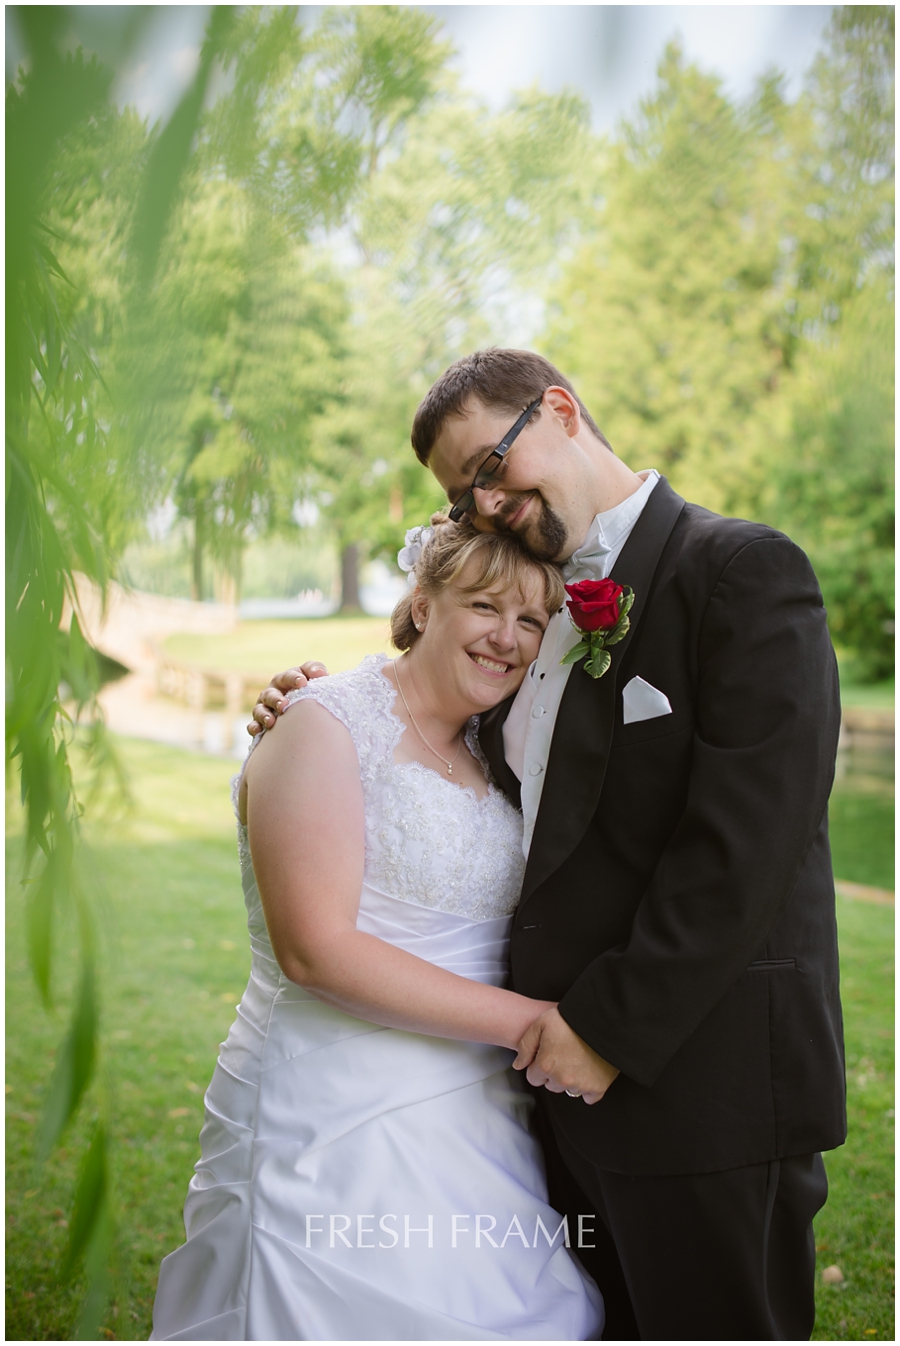 Dave & Mandy – Husband & Wife, Neenah Wedding Photography